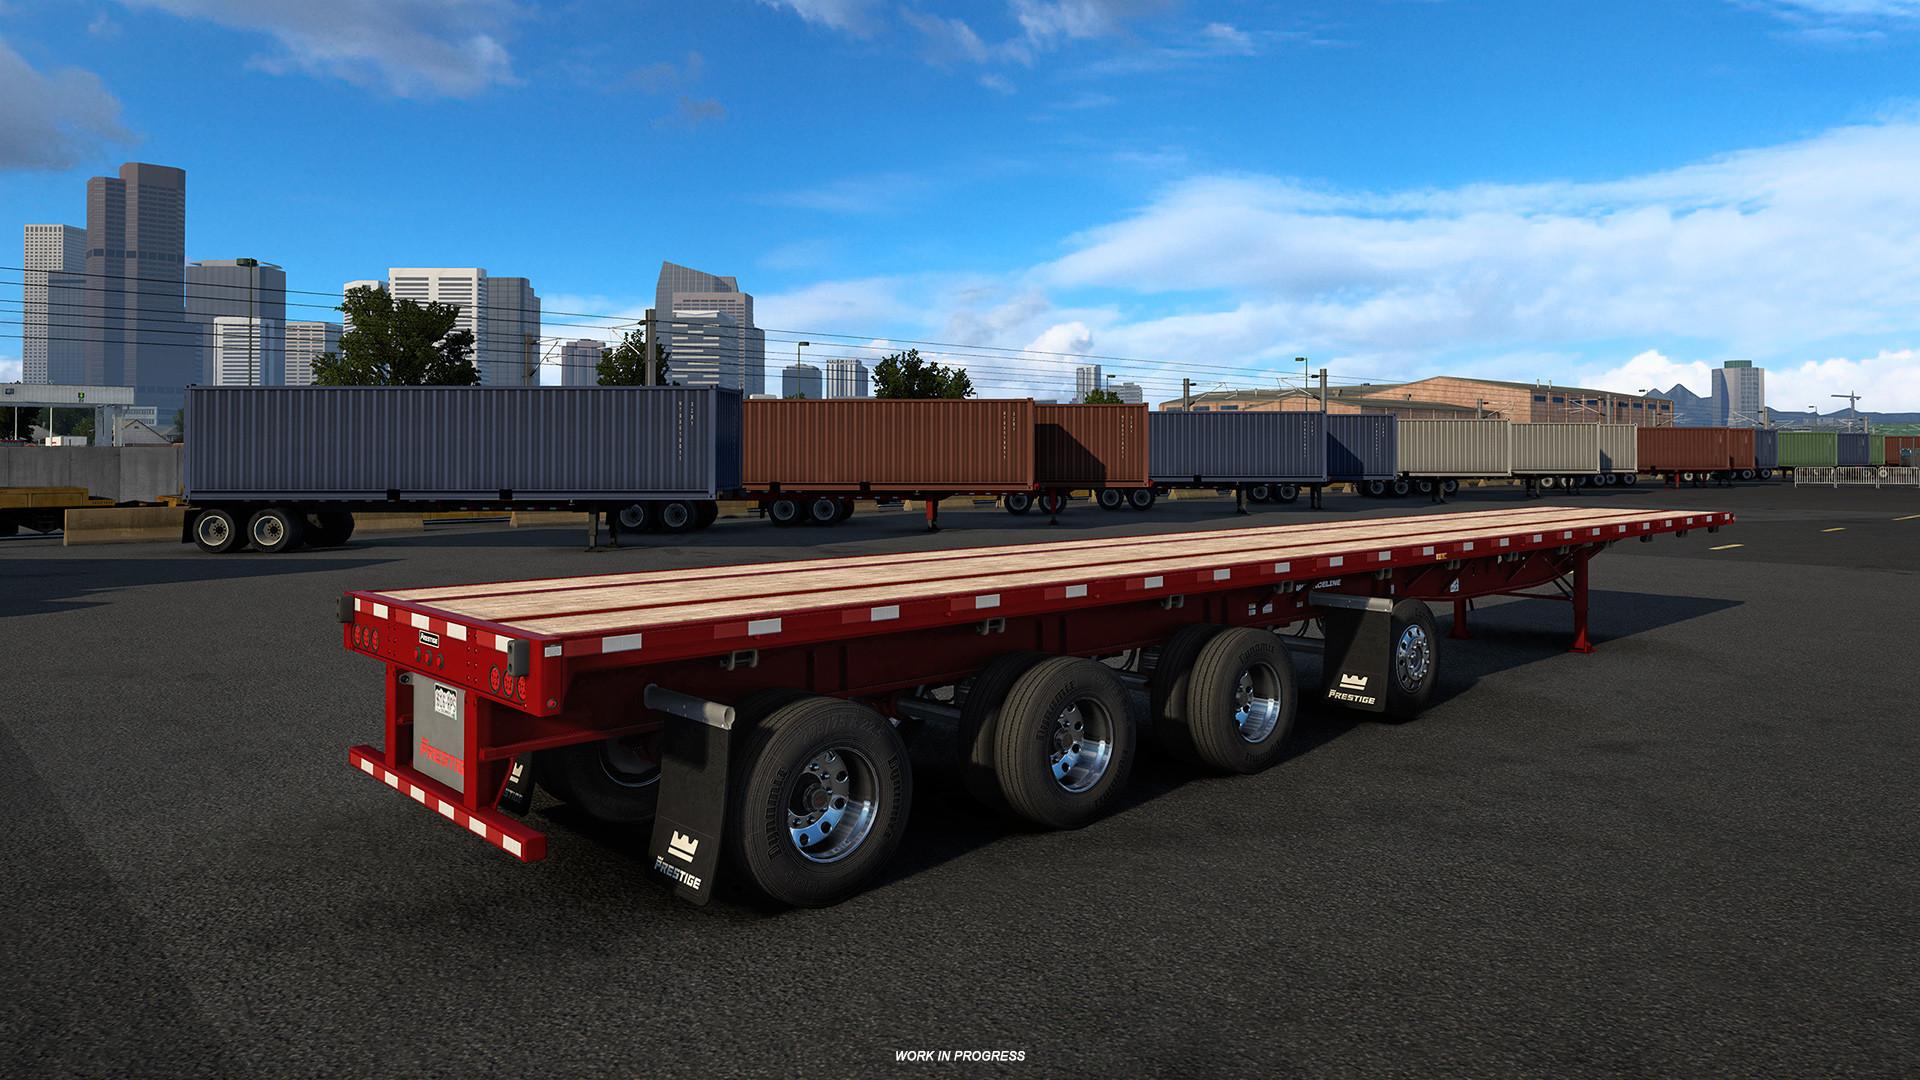 American Truck Simulator - Lode King &amp; Prestige Trailers Pack